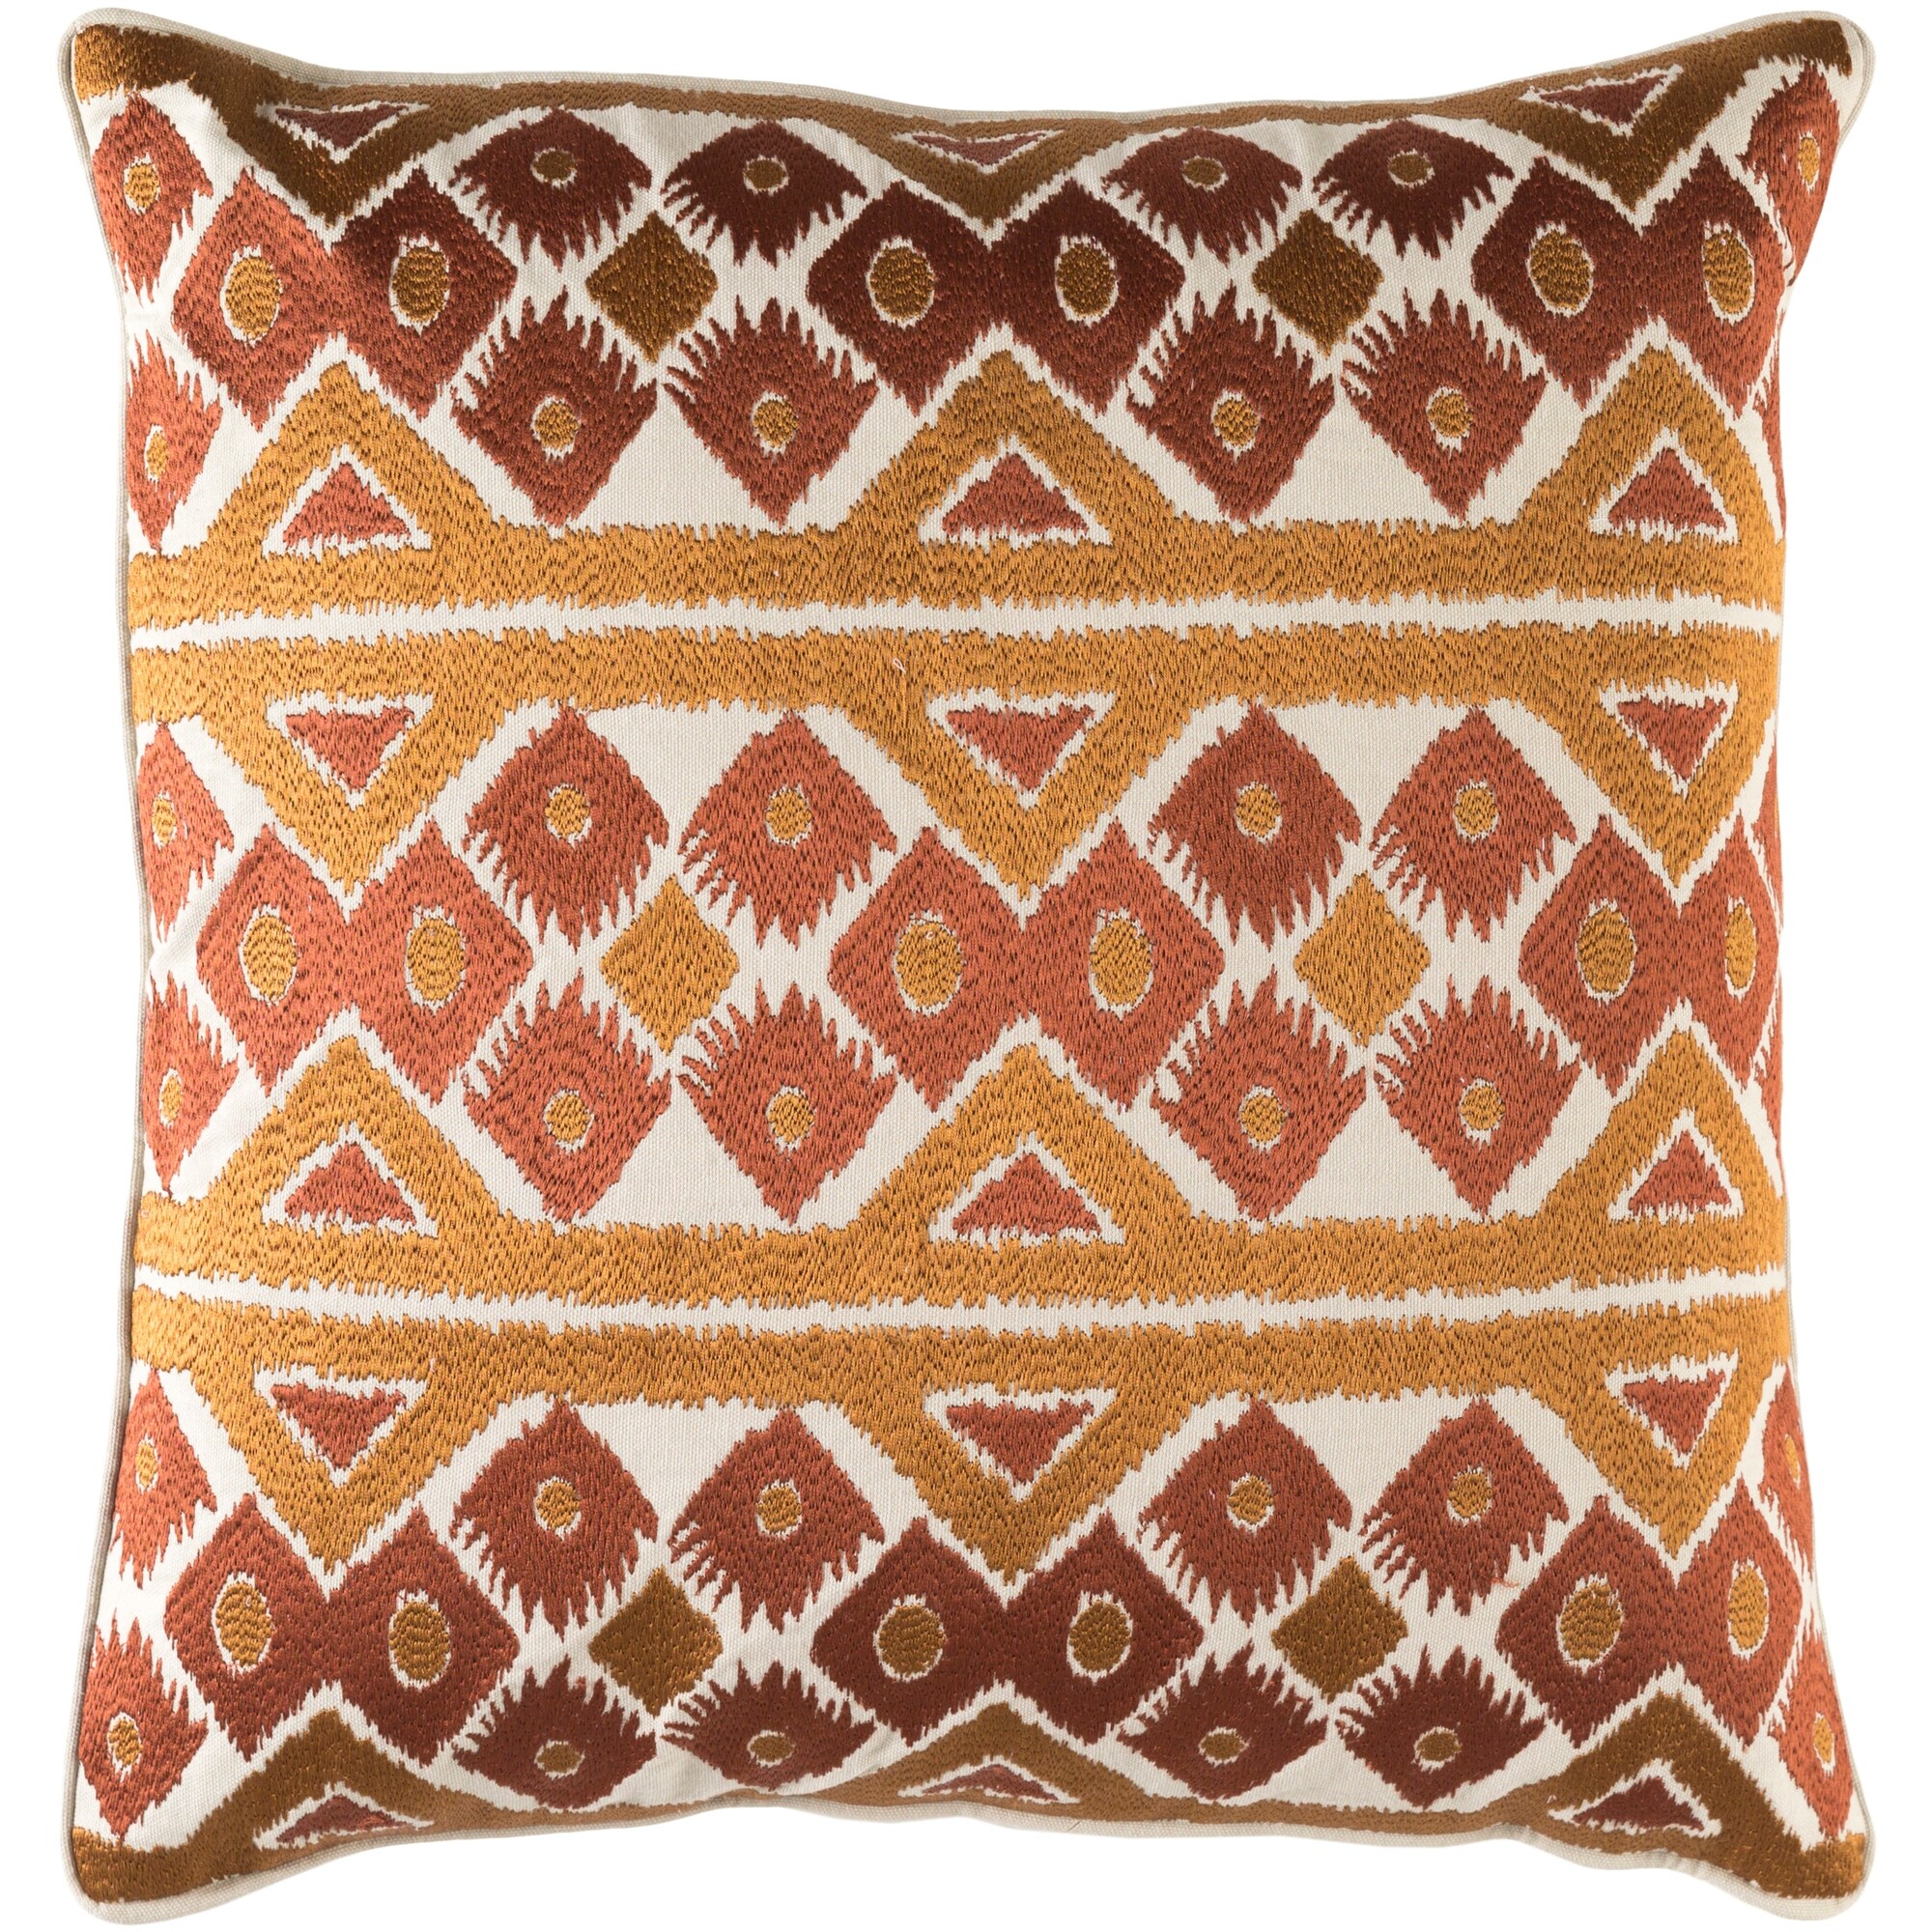 Decorative Sigatoka Brown 18-inch Throw Pillow Cover